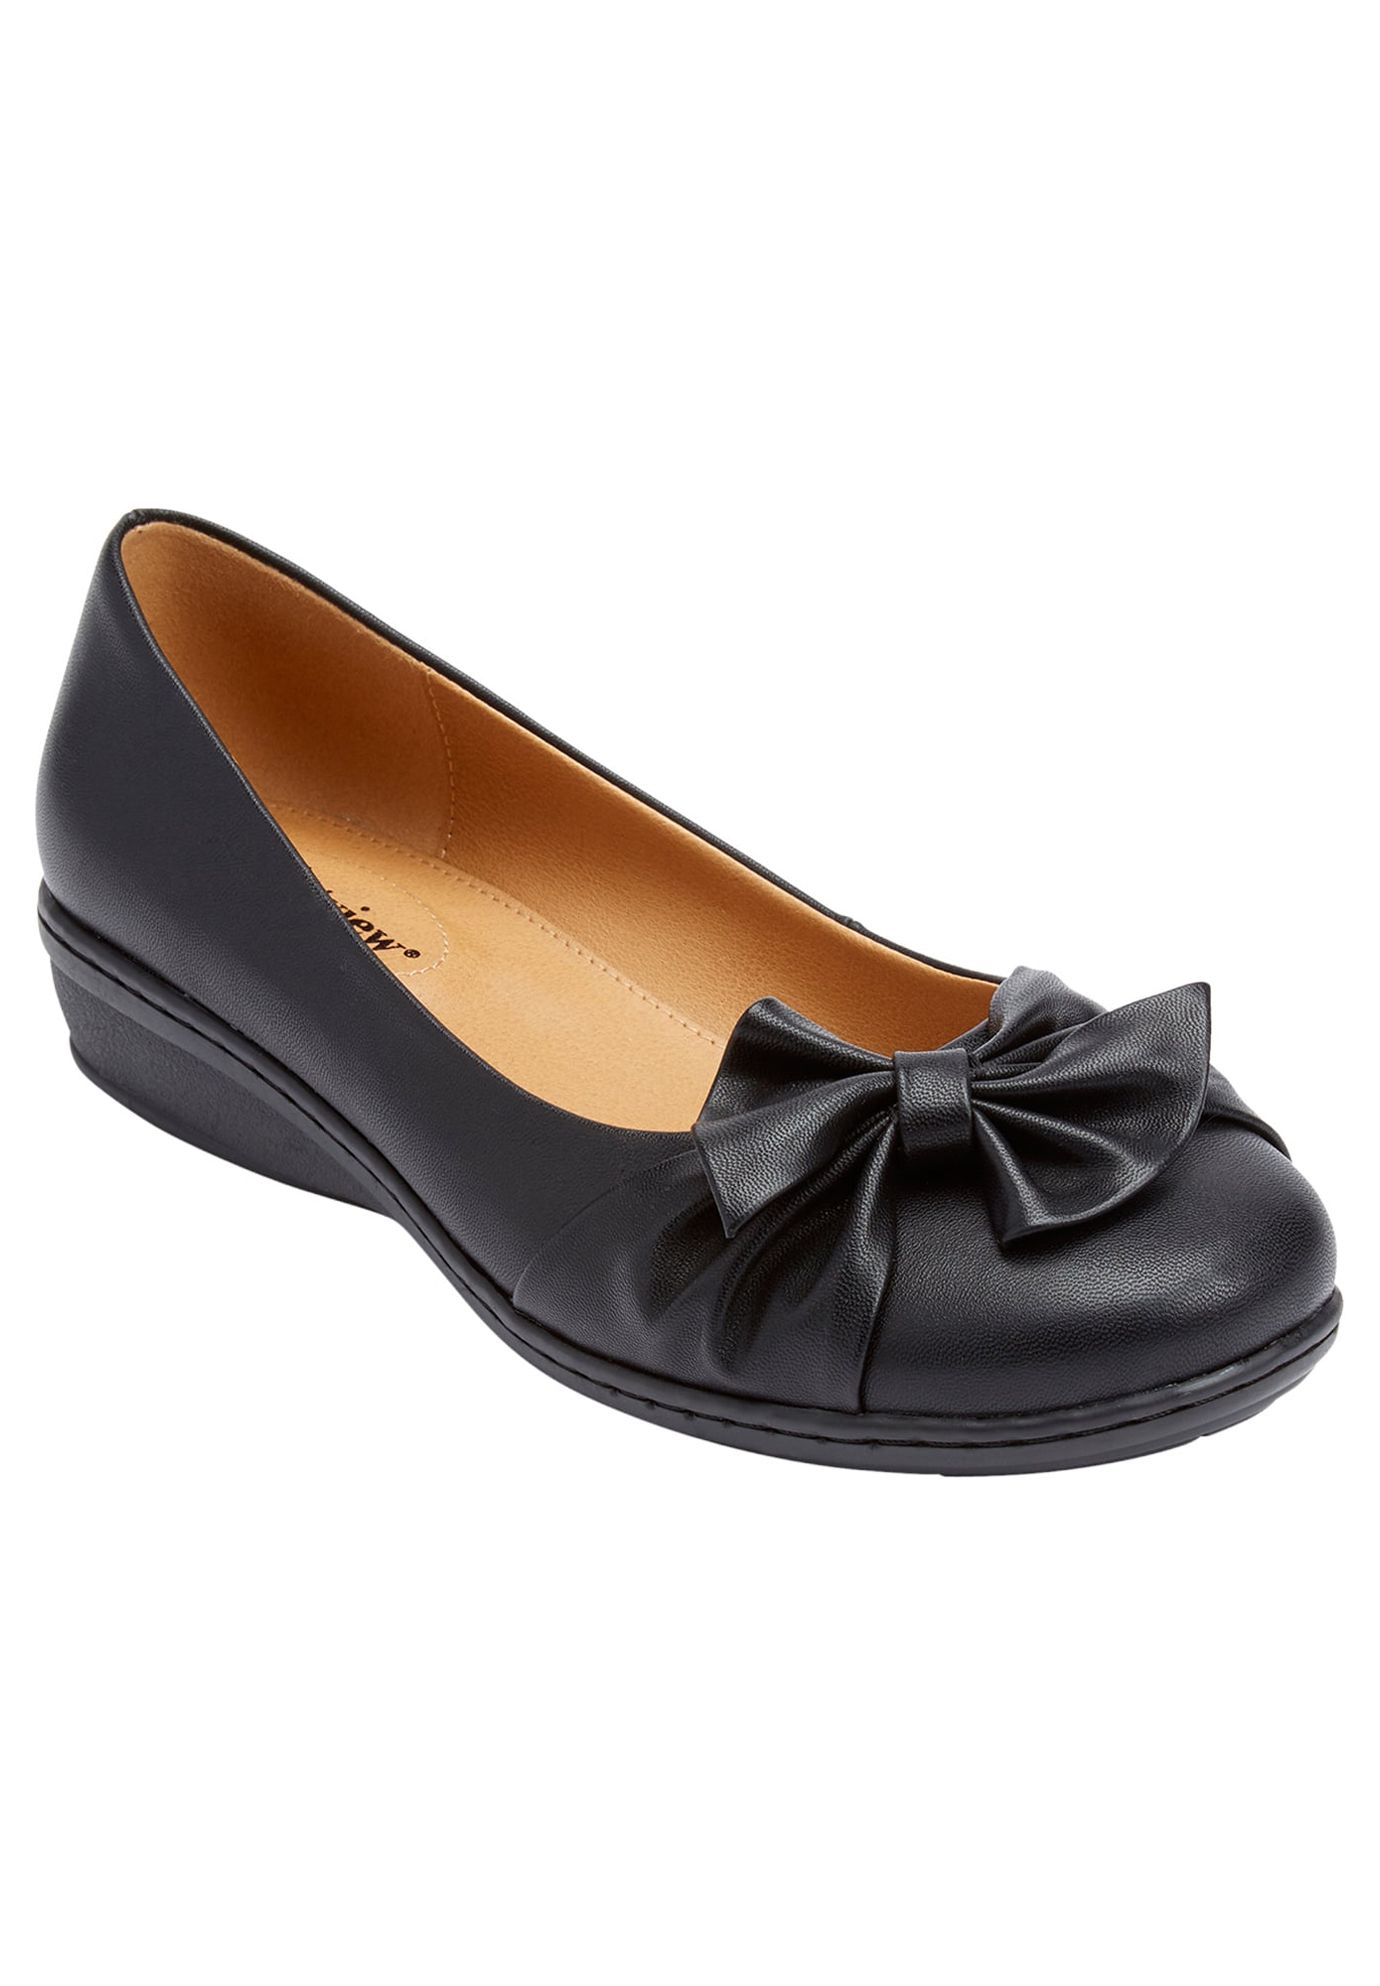 Comfortview Women's Wide Width The Pamela Slip On Flat Loafer Shoes - image 1 of 7